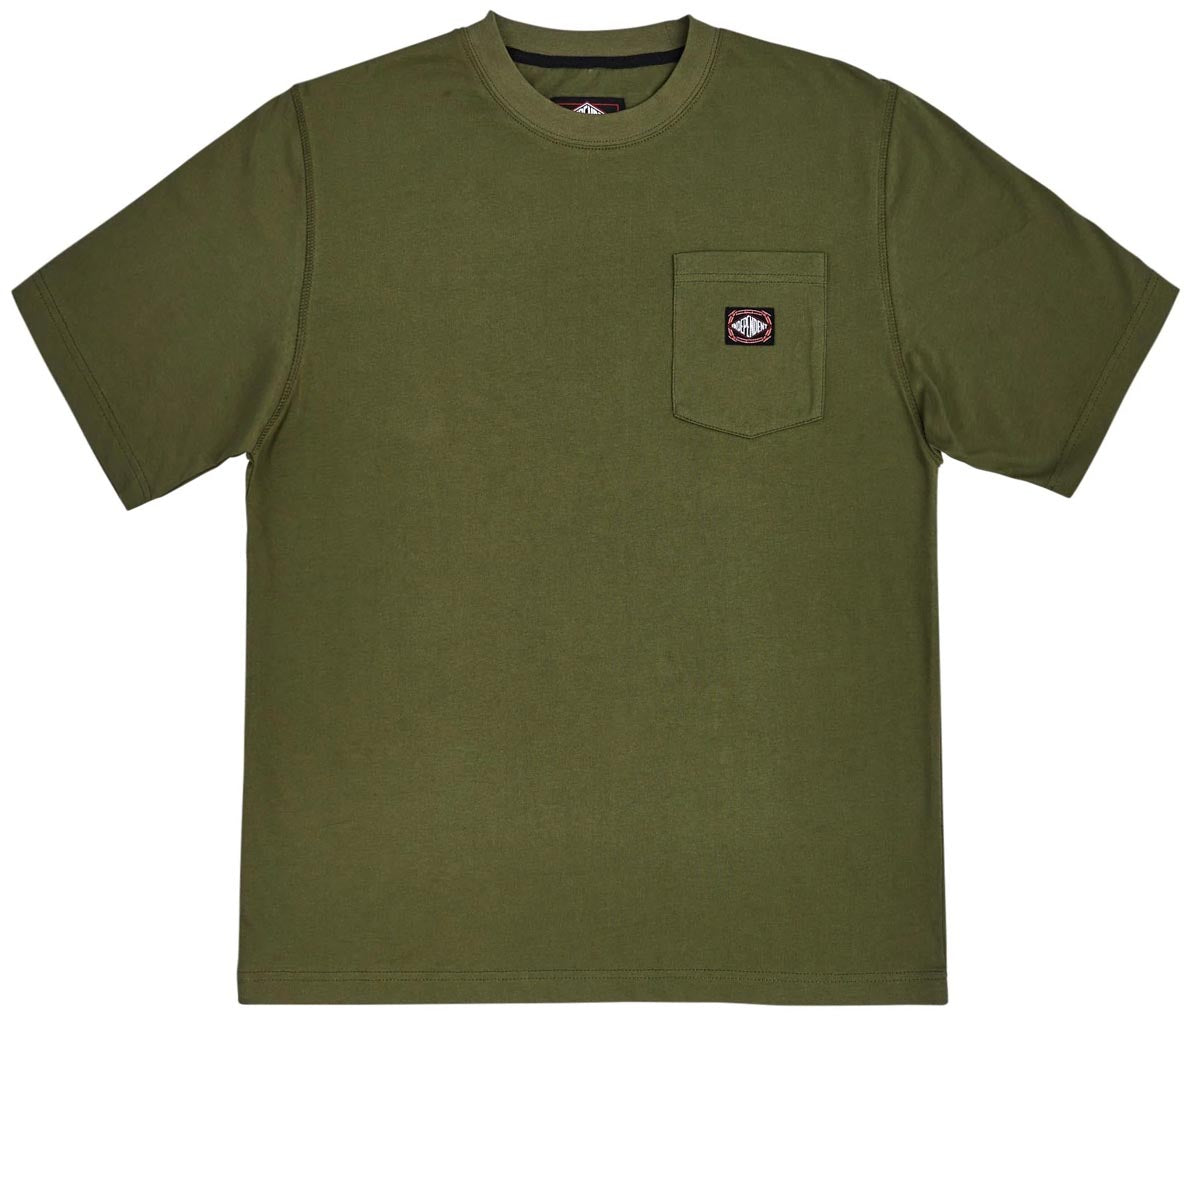 Independent Summit Scroll Pocket T-Shirt - Olive image 1